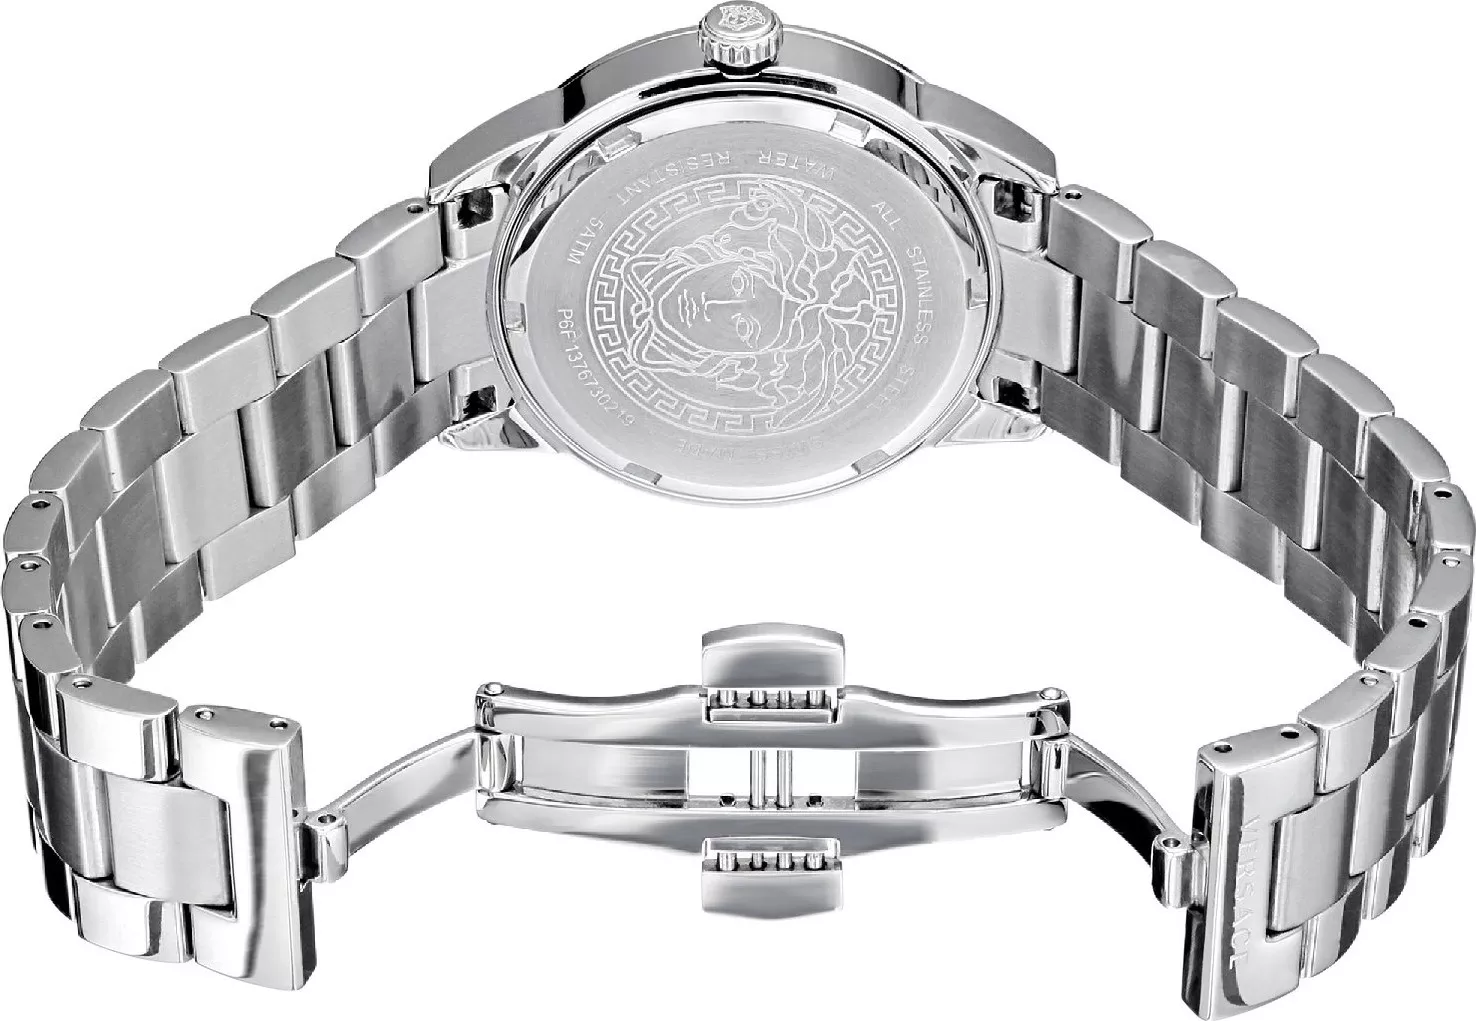 Versace Pair Stainless Steel Watch 34mm